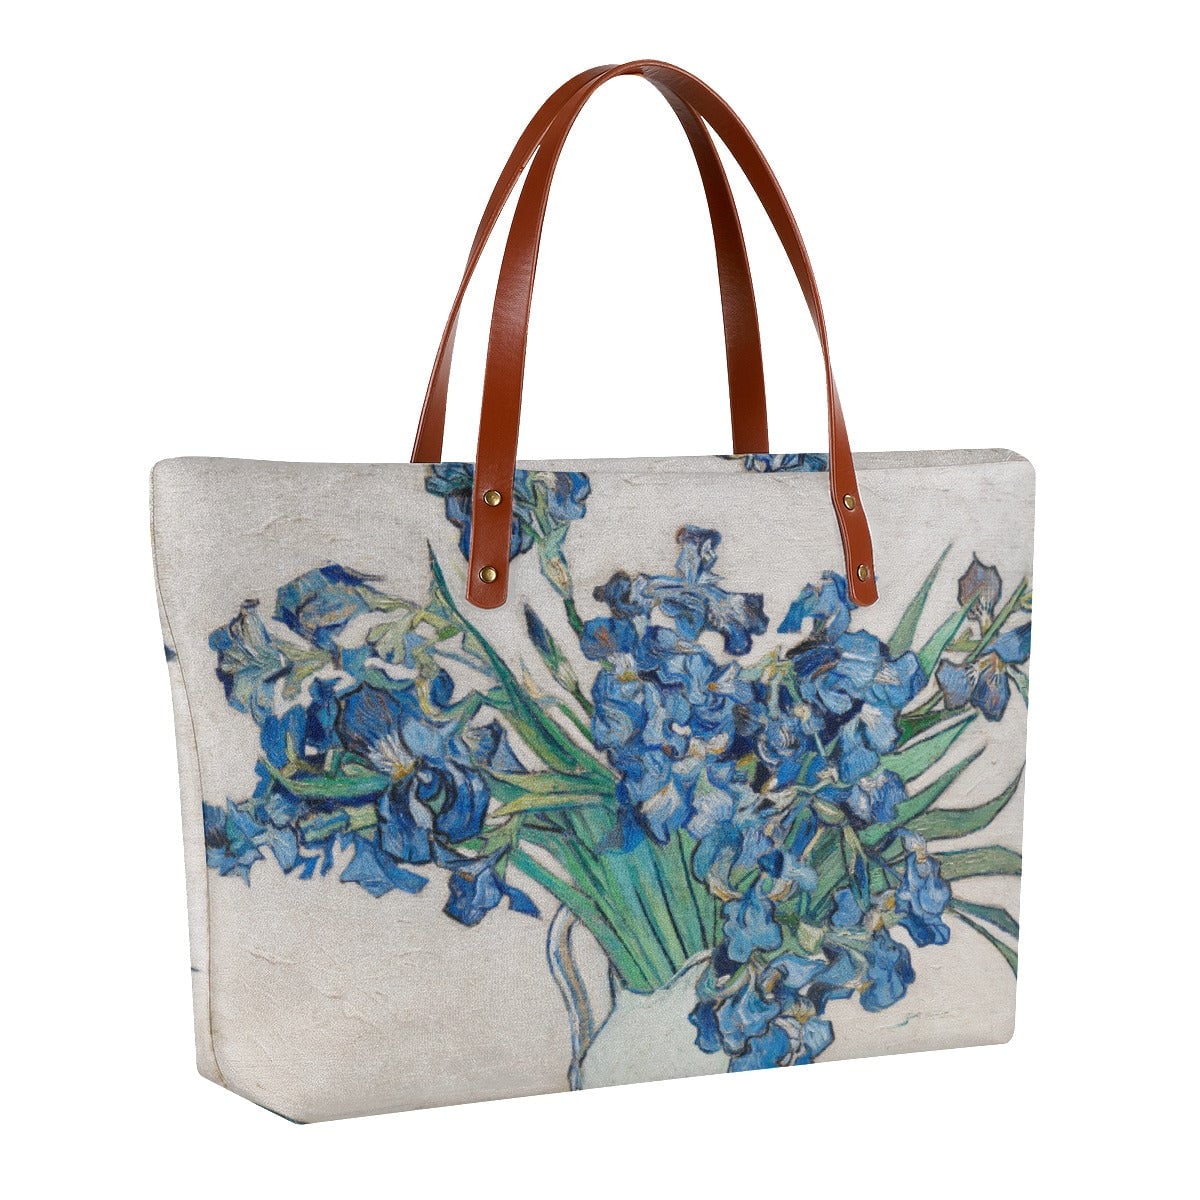 Vincent van Gogh’s Masterpiece Irises Tote Bag